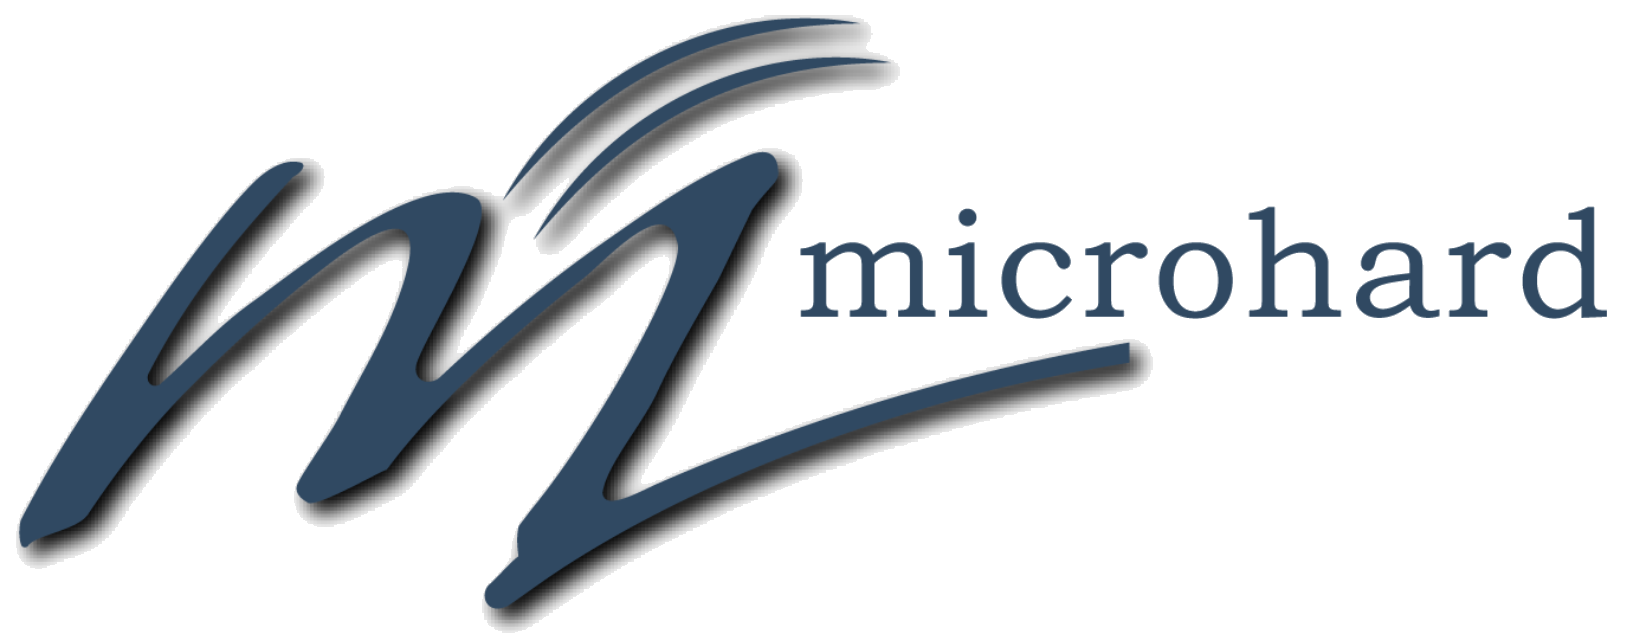 Microhard Logo